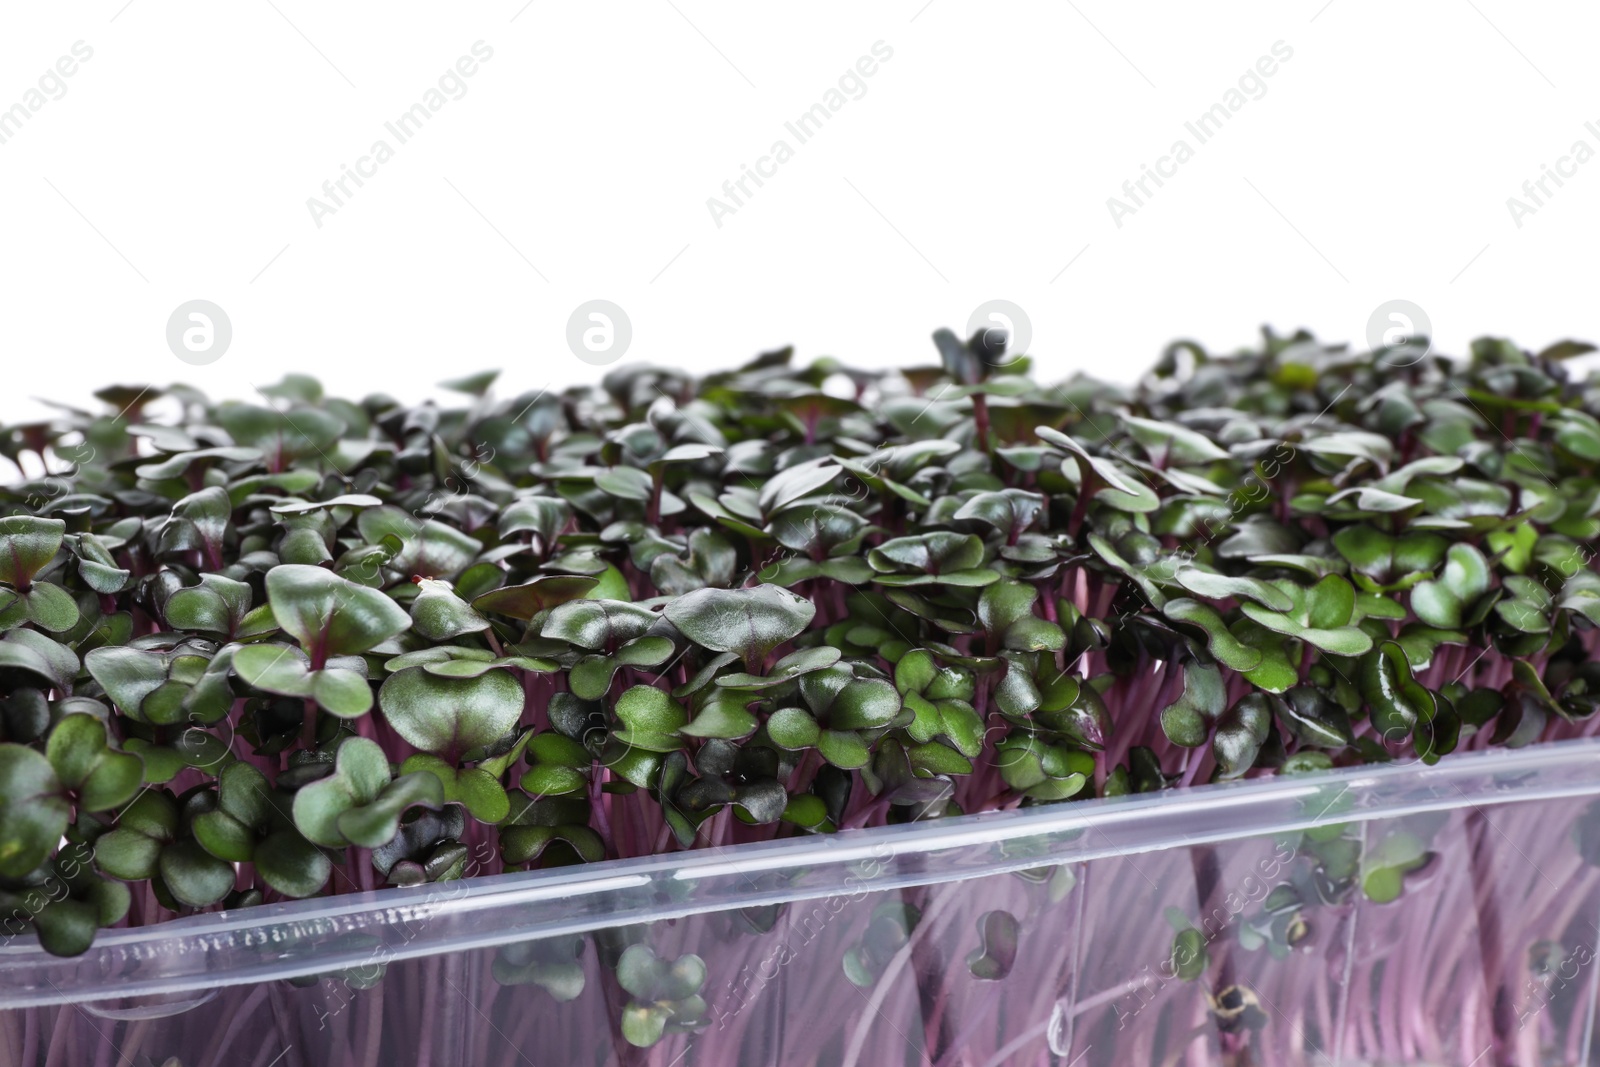 Photo of Fresh organic microgreen on white background, closeup